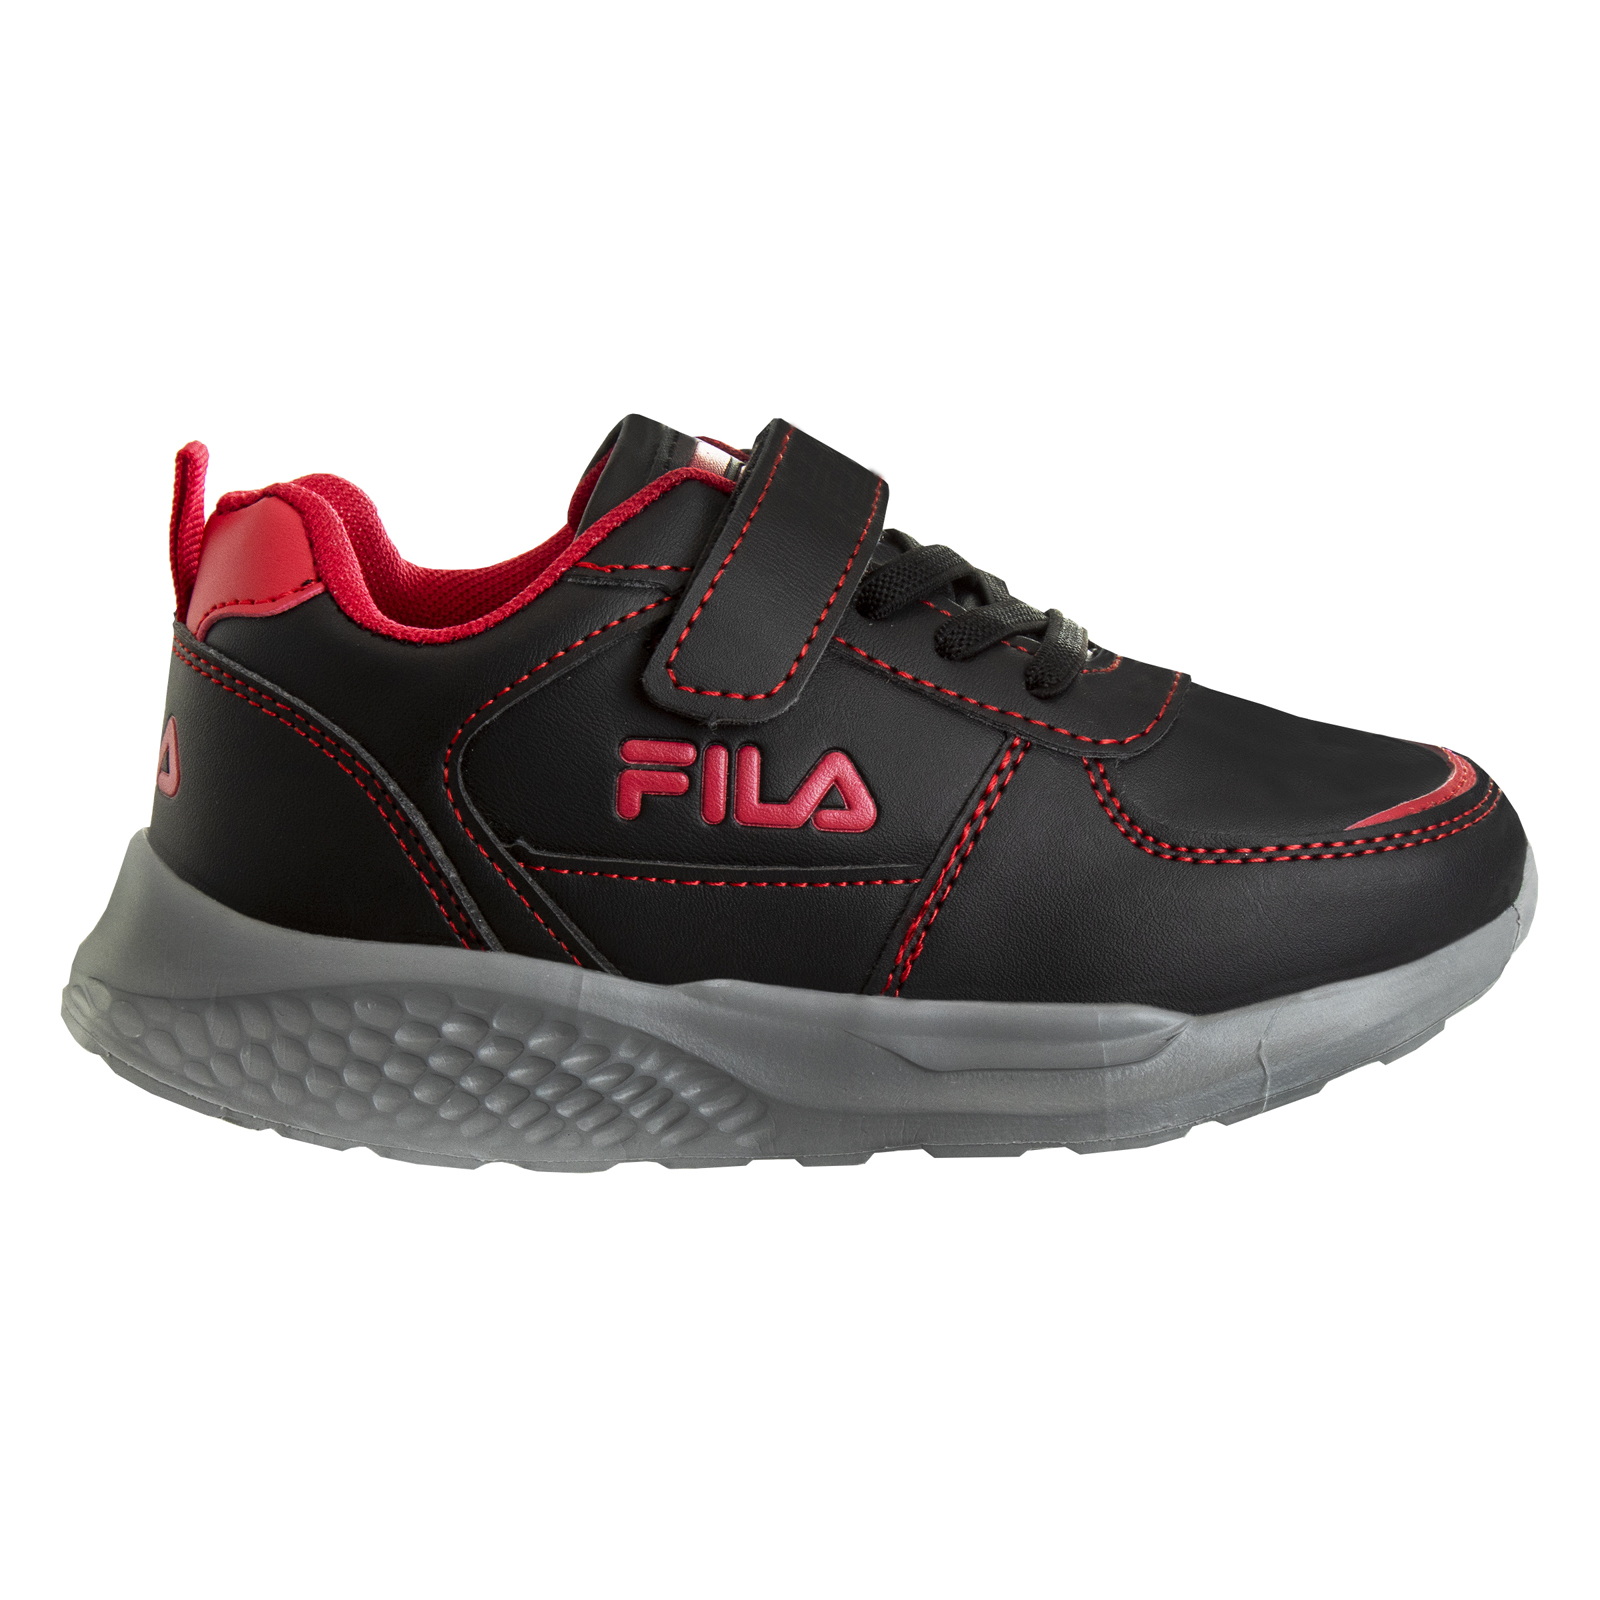 Fila - COMFORT SHINE 2 FOOTWEAR - BLACK RED TRUE